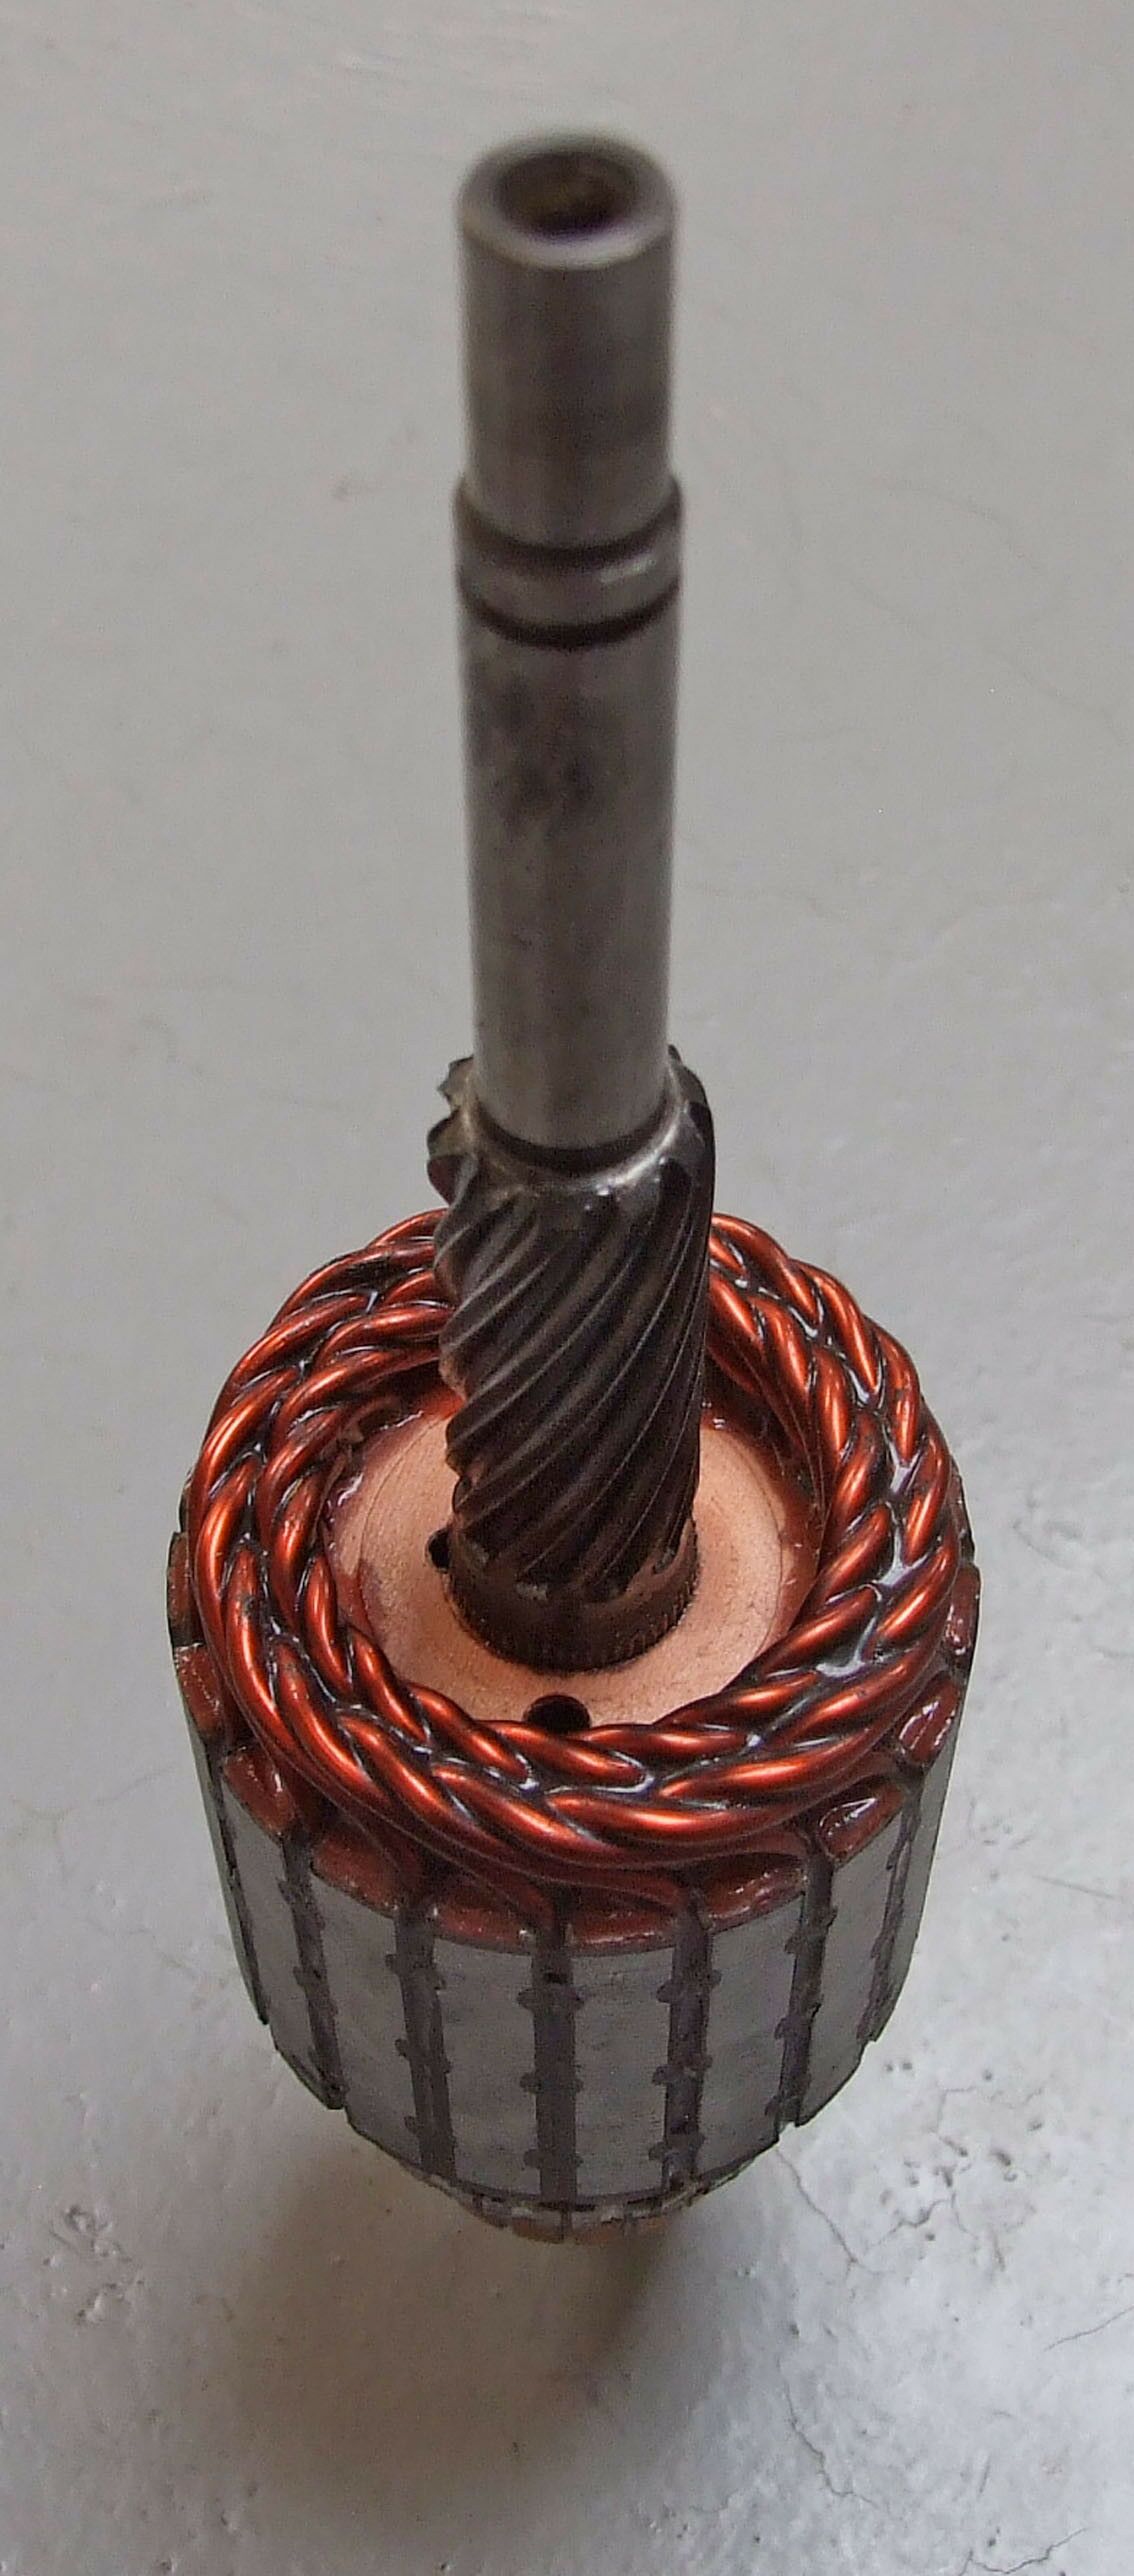 Rotor elektropokretaca marelli